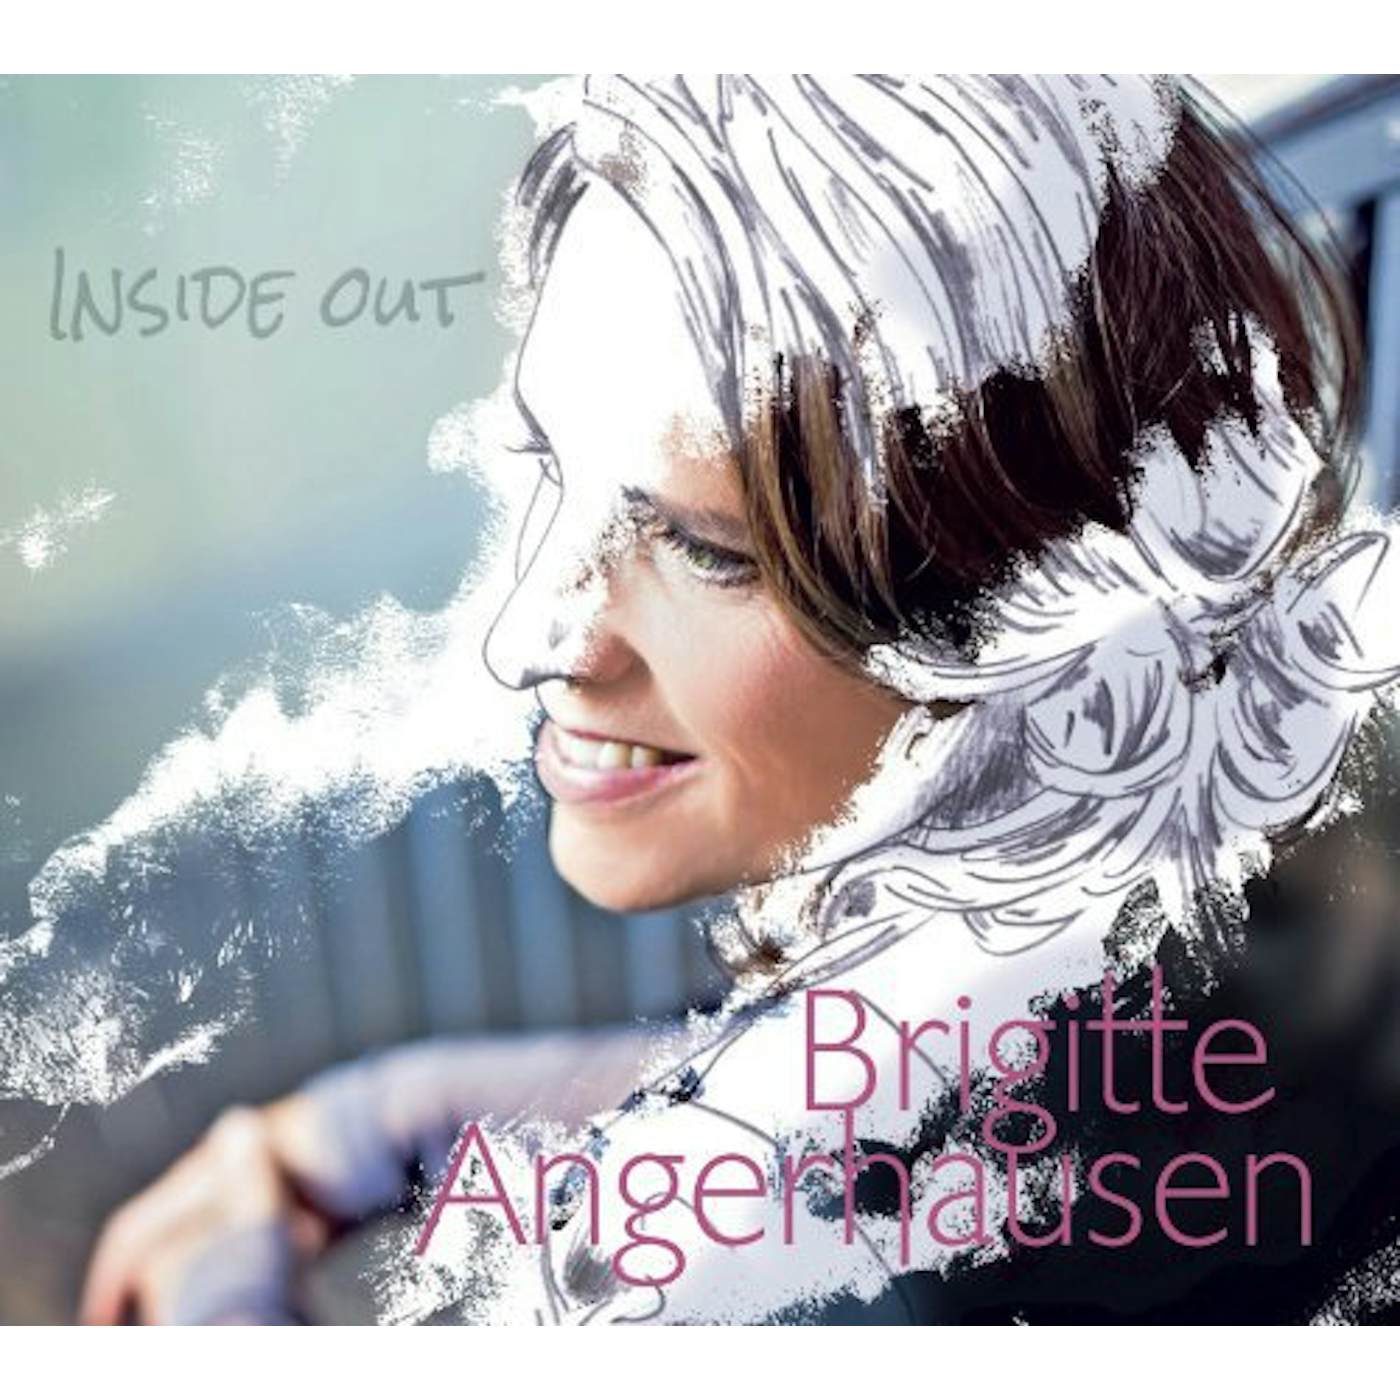 Brigitte Angerhausen Inside Out Vinyl Record